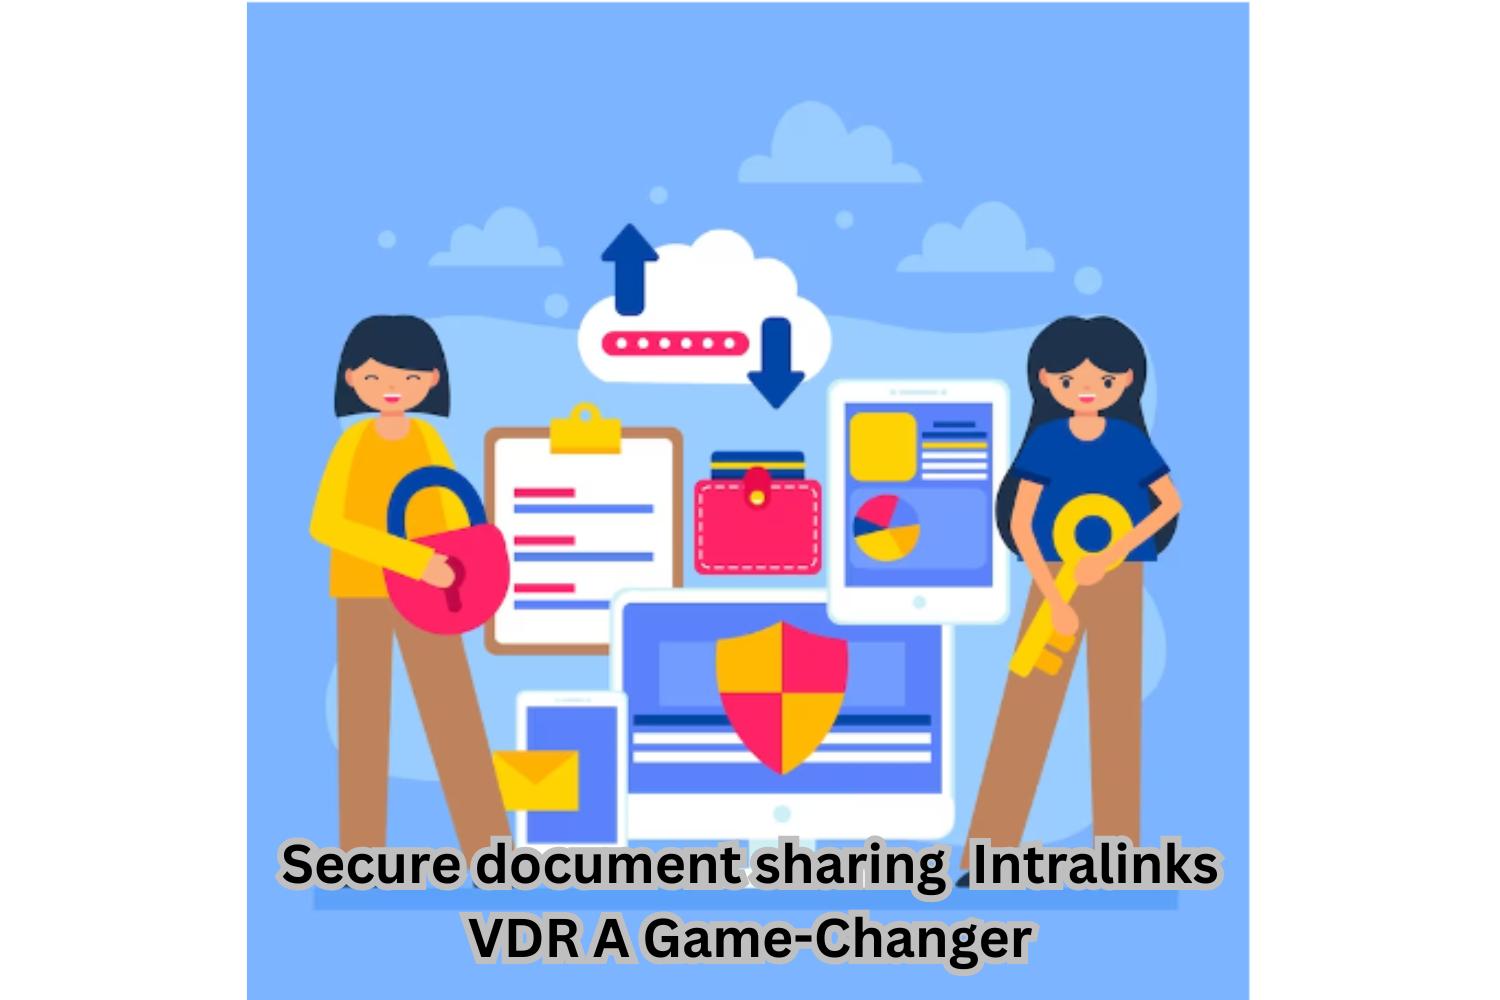 "Illustration showing Intralinks VDR interface for secure document sharing"